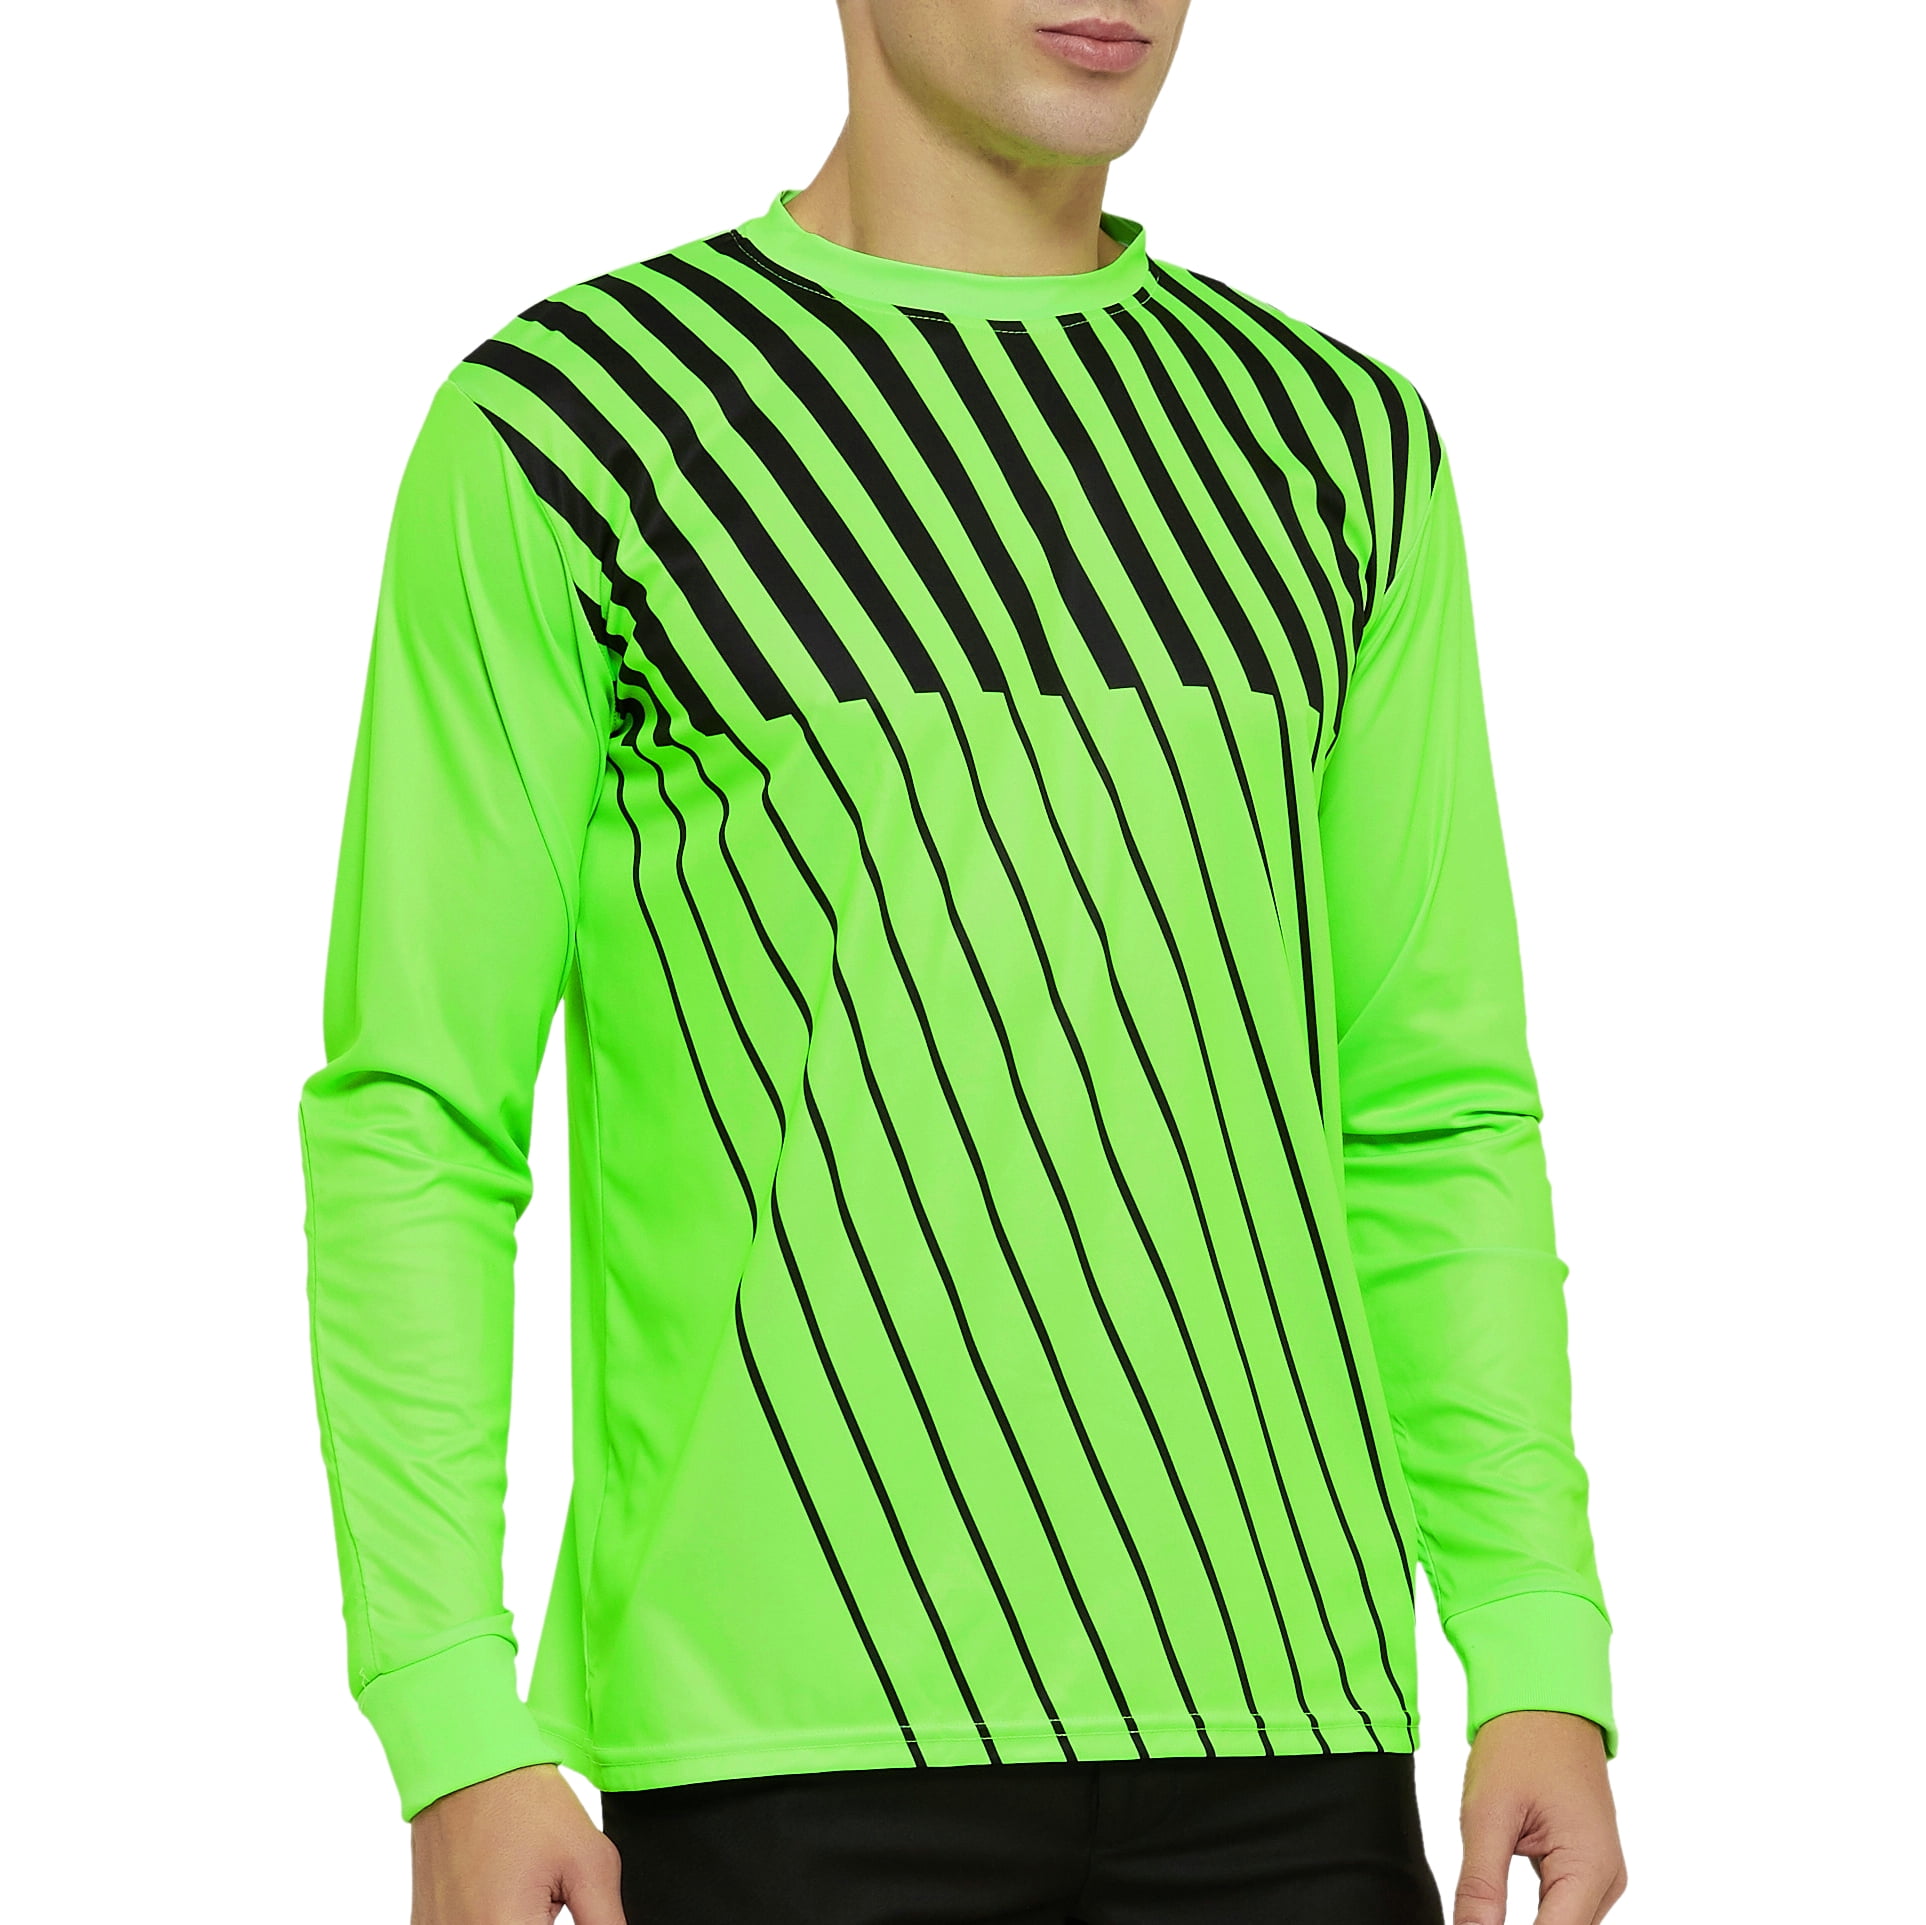 Soccer Goalie Goalkeeper Uniform Adult Men's Long Sleeve Jersey & Long Pants 023 